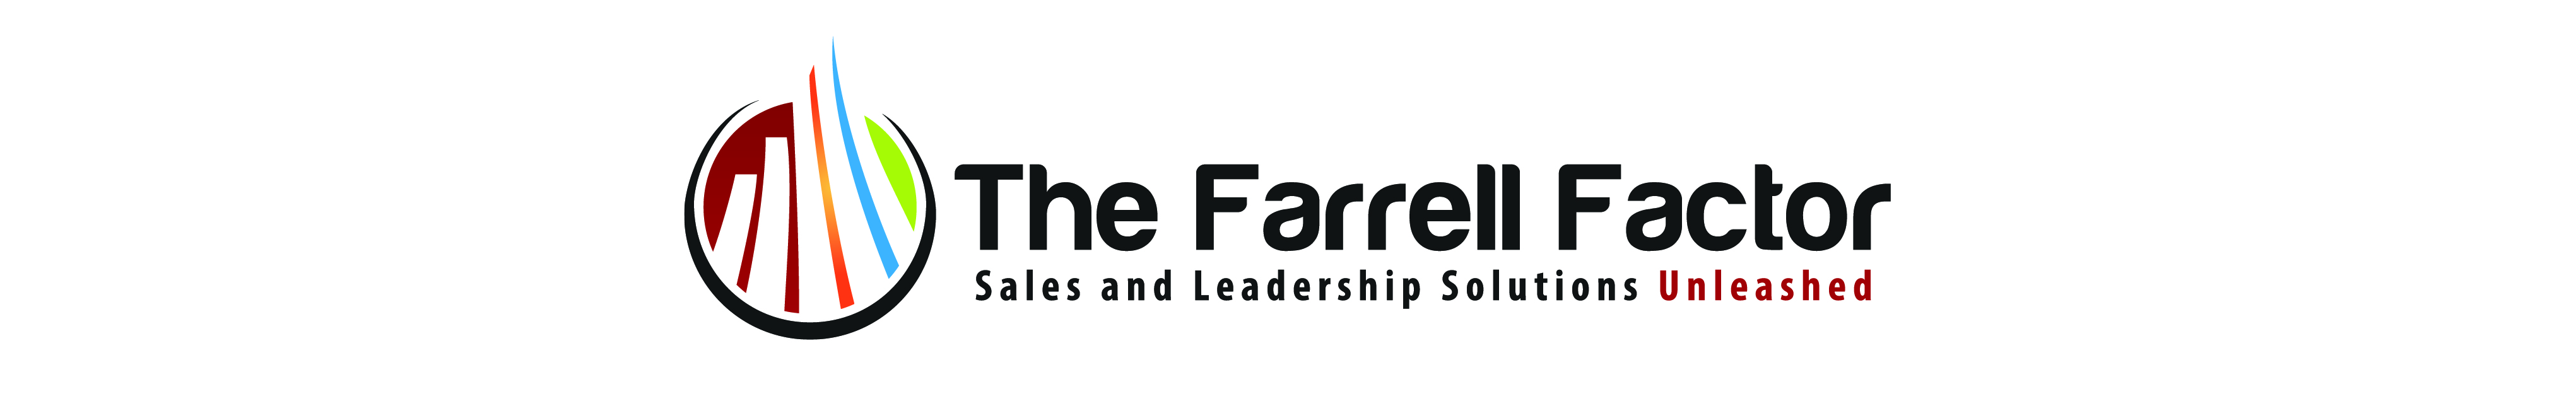 The Farrell Factor